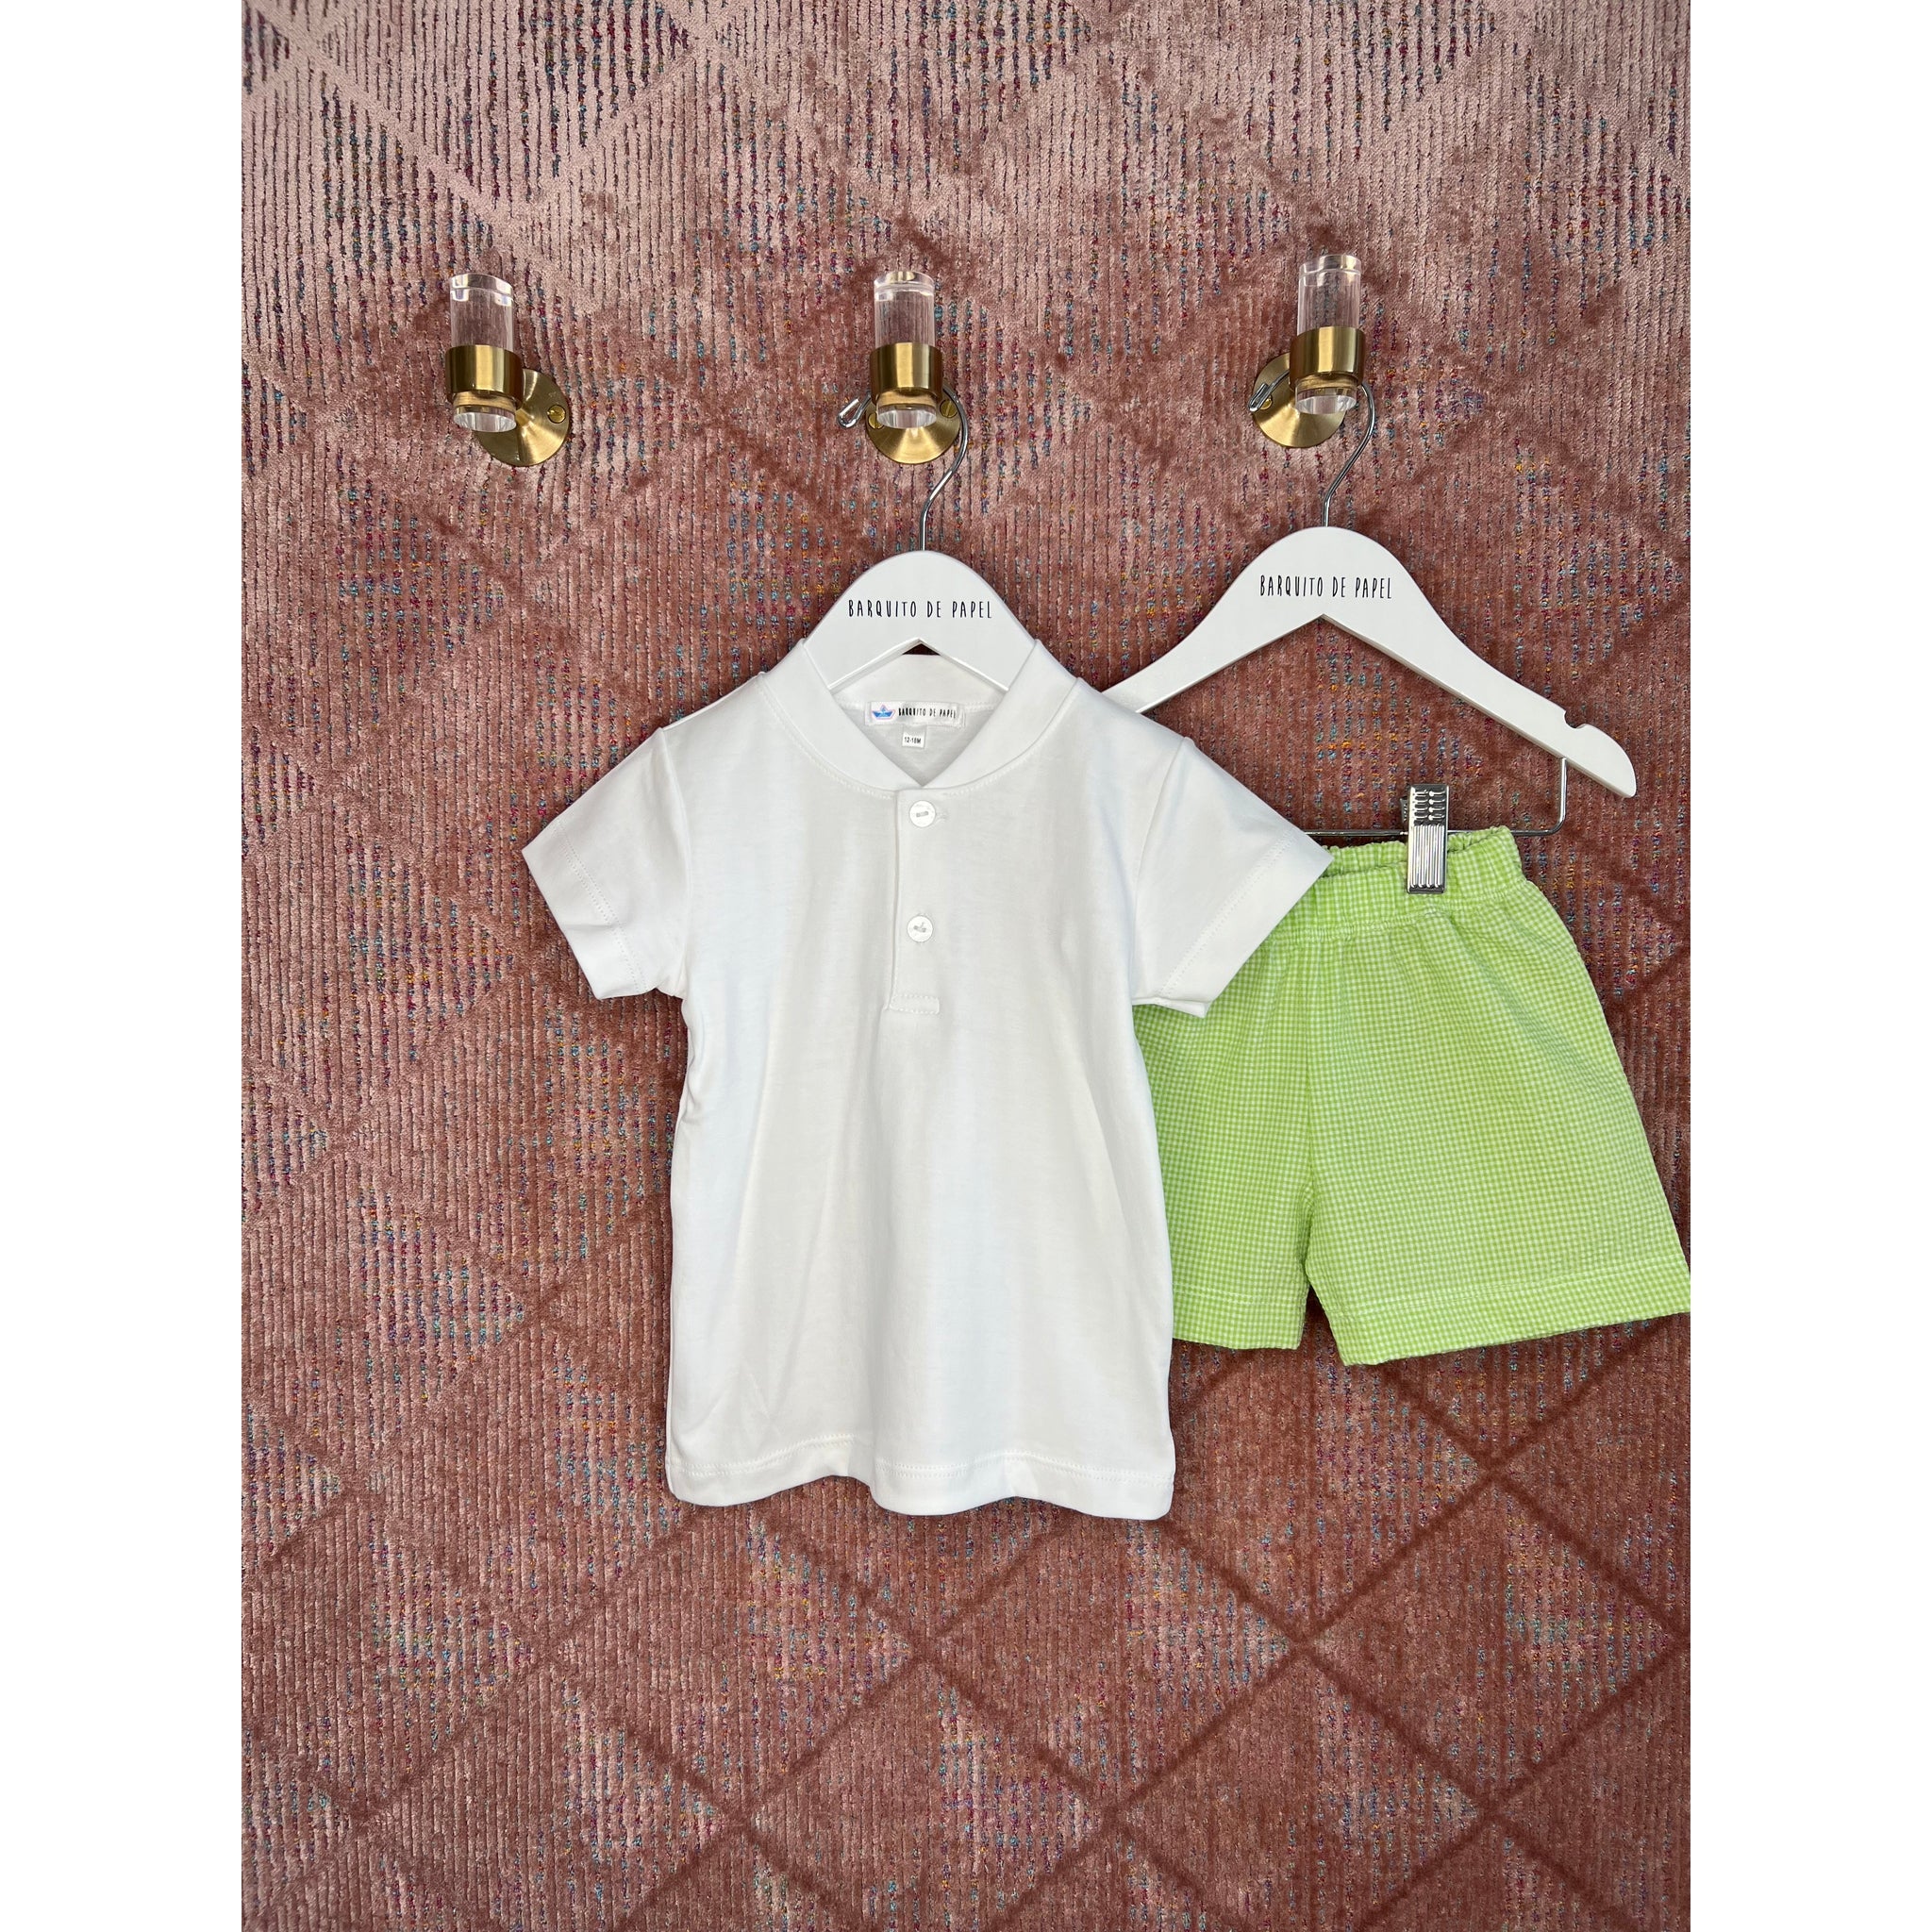 Cloque Pima Tshirt Set - Green Seersucker Vichy